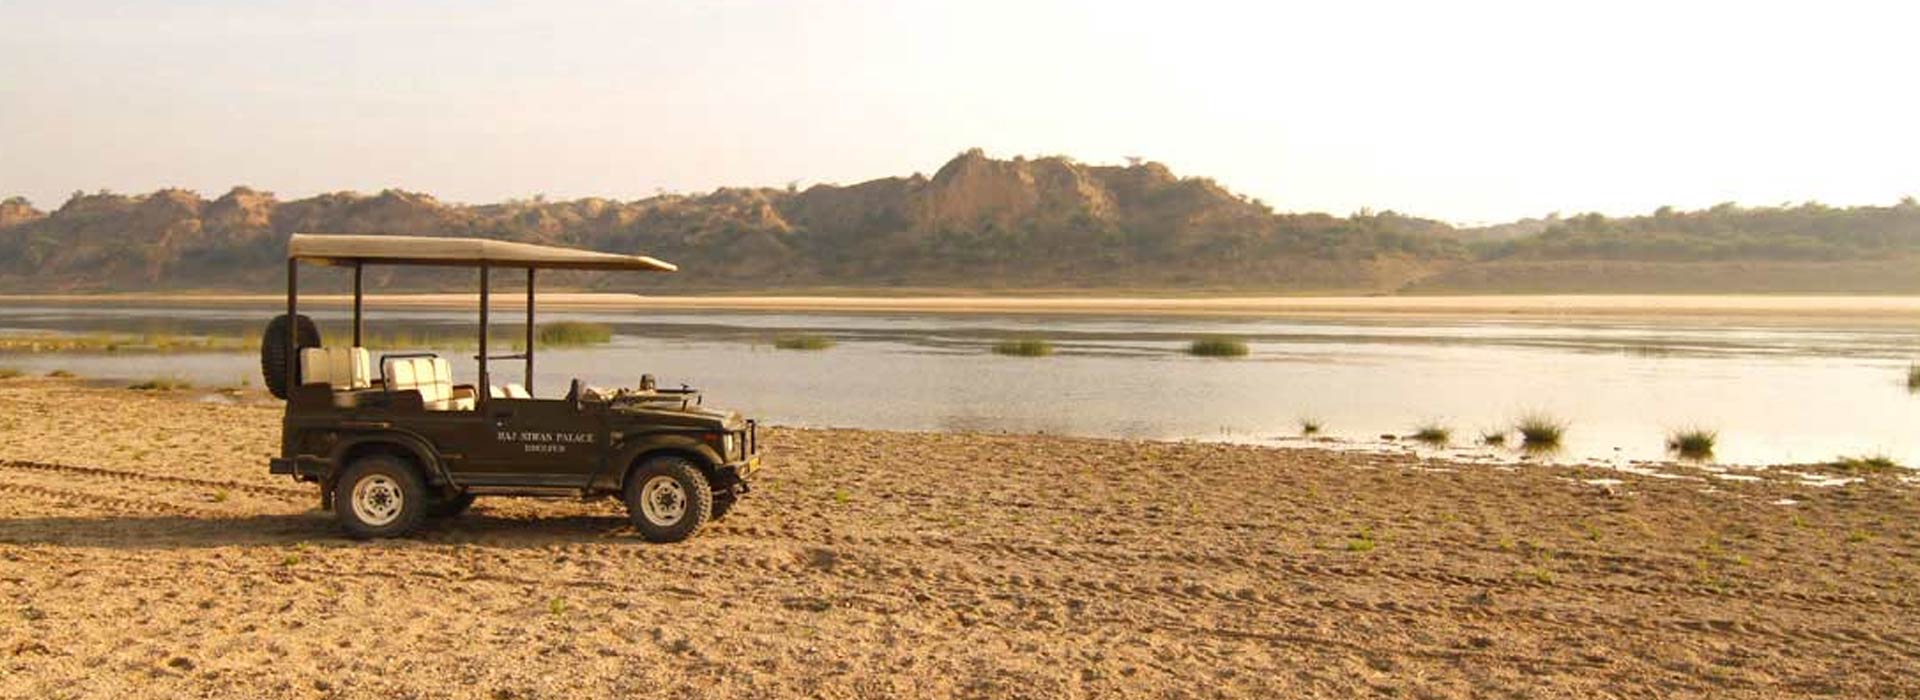 taj-mahal-tour-with-chambal-safari